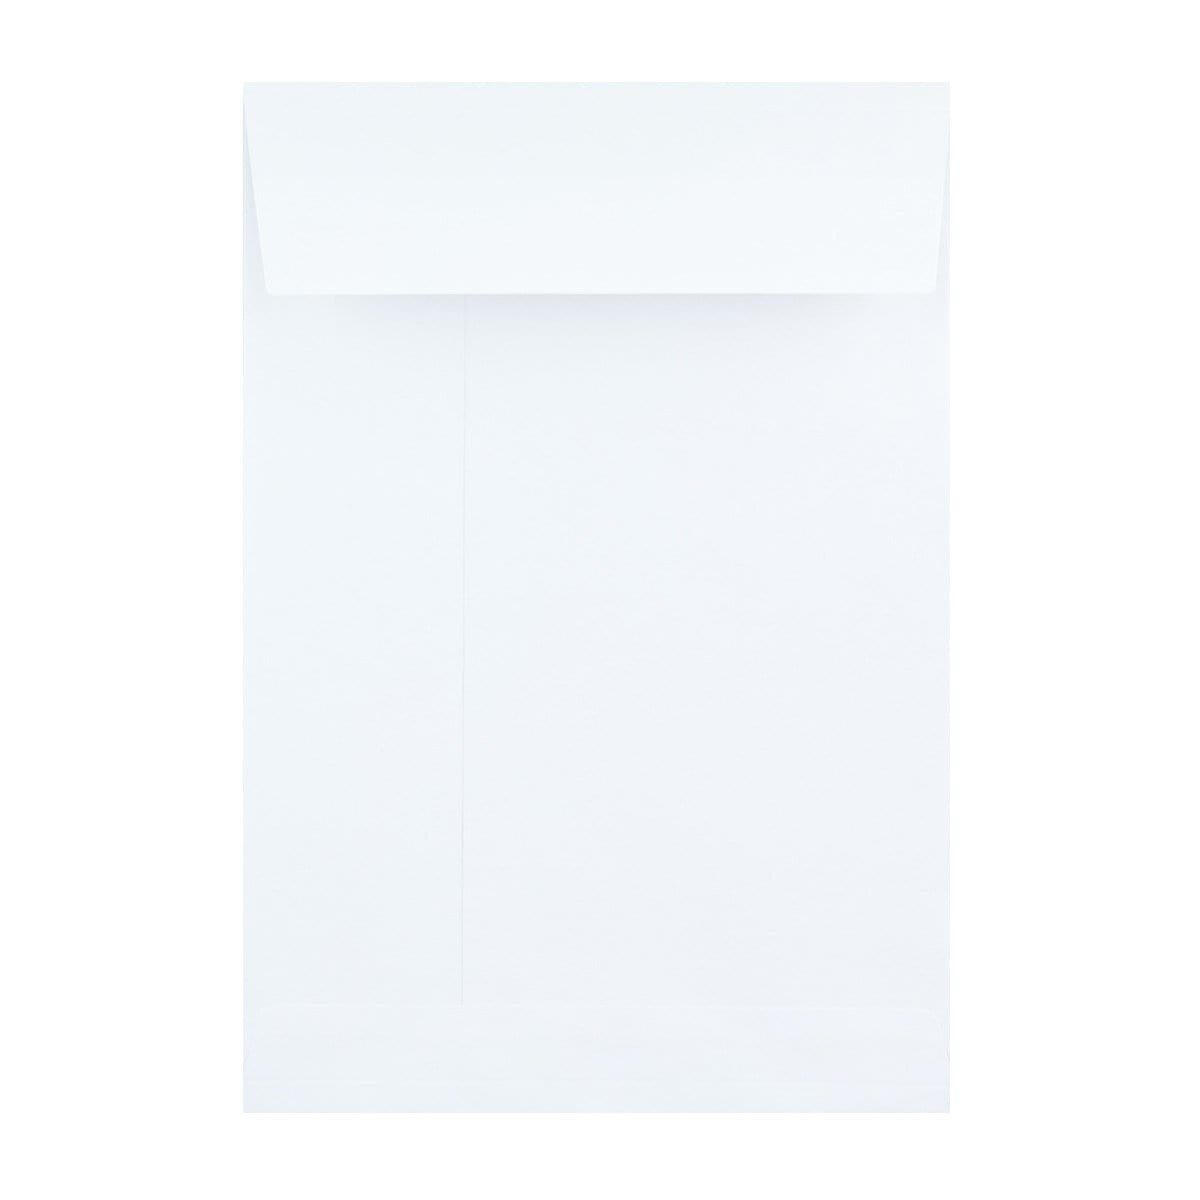 products/c5plus-white-gusset-envelopes.jpg